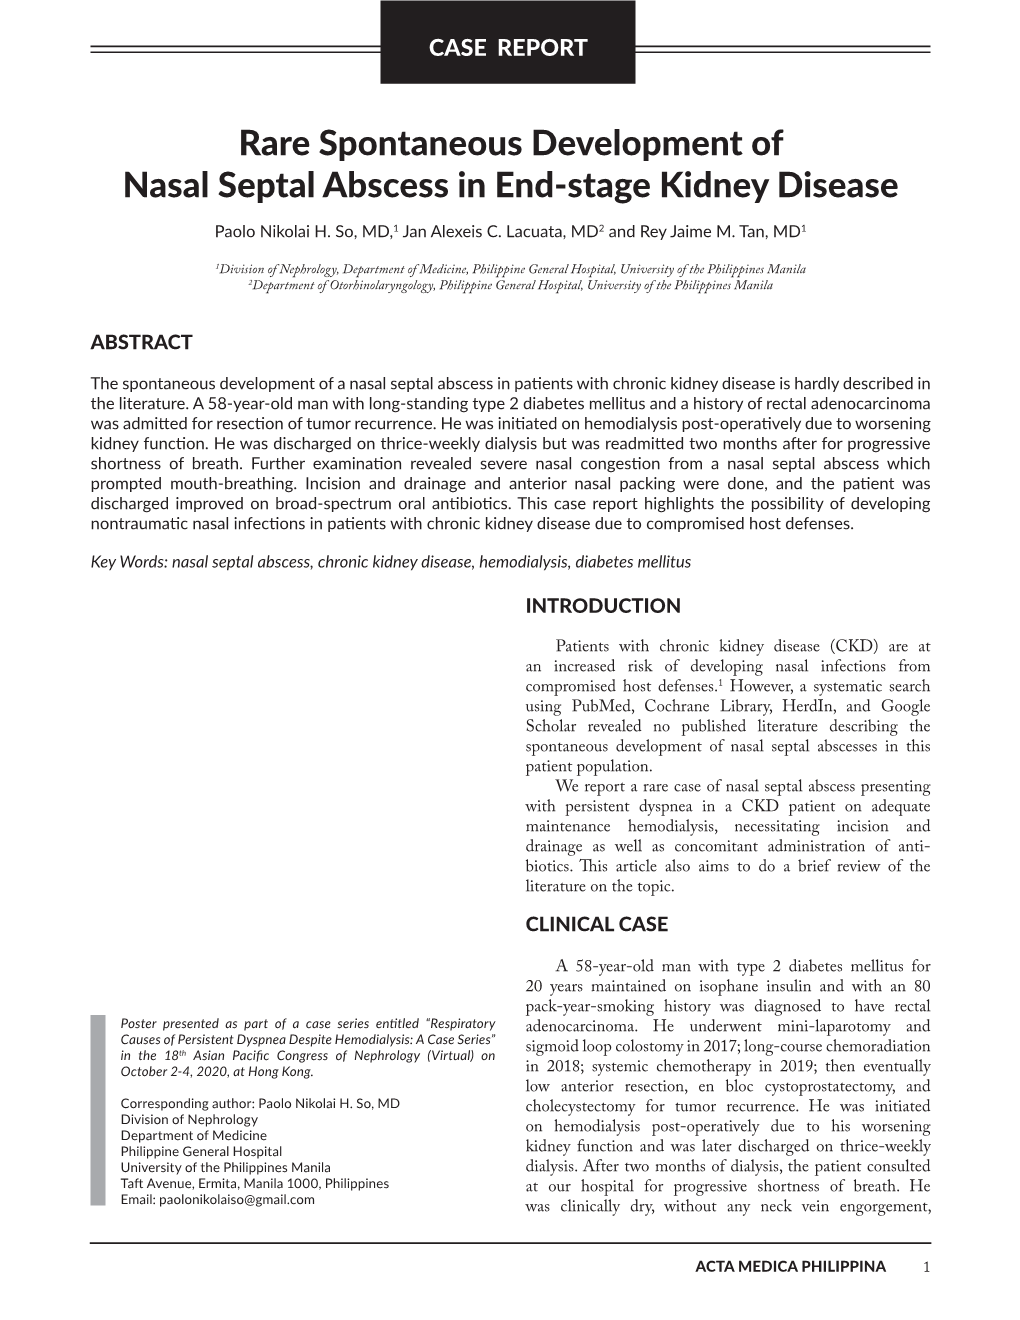 Rare Spontaneous Development of Nasal Septal Abscess in End-Stage Kidney Disease